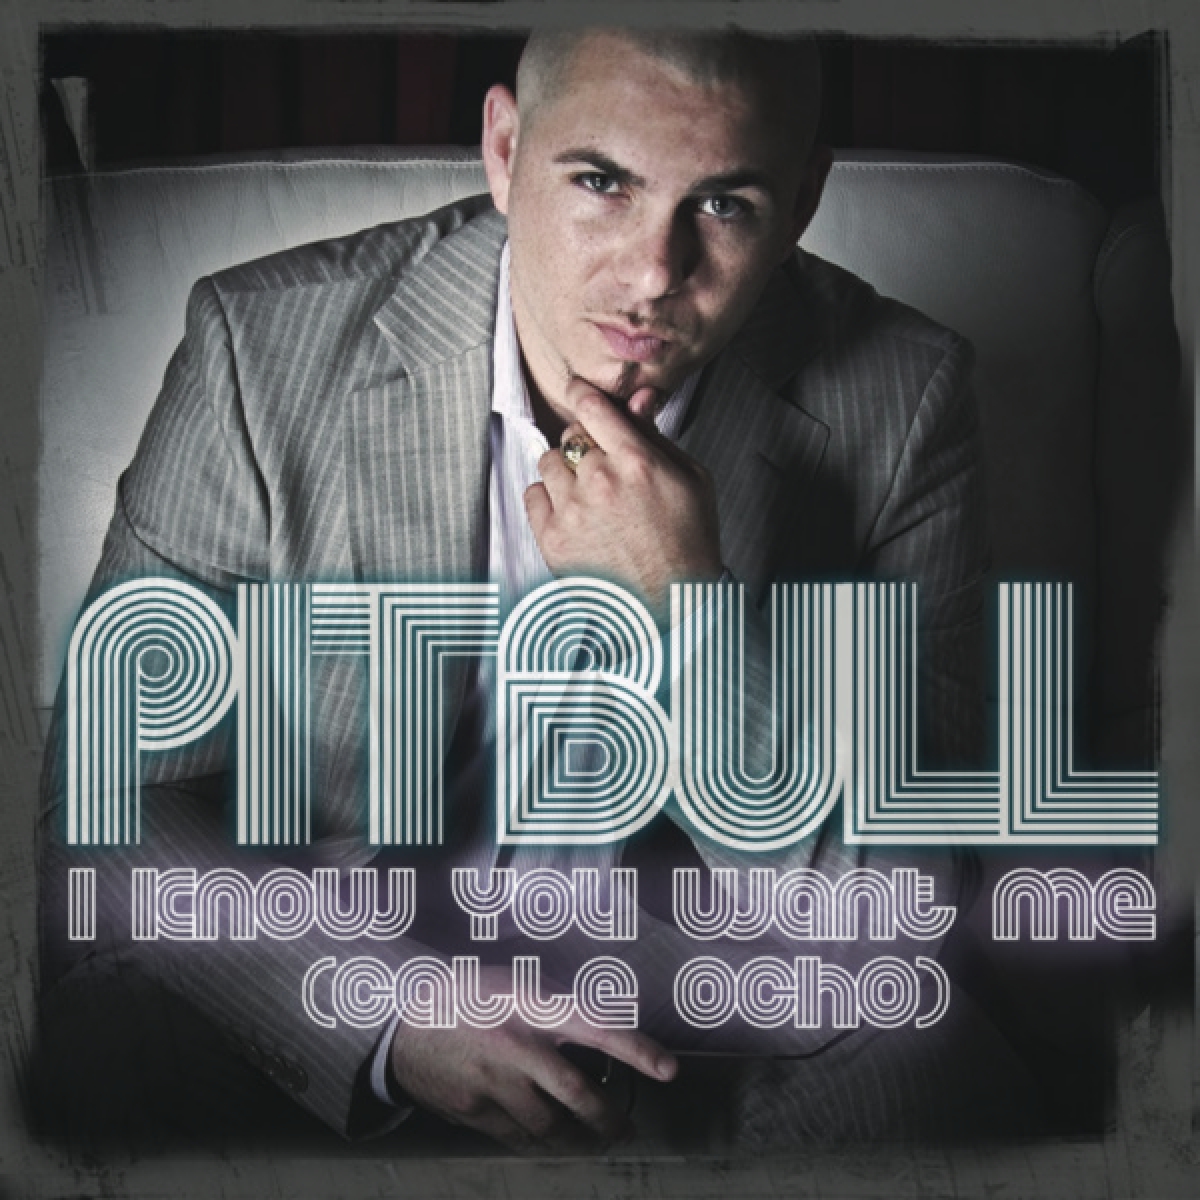 PITBULL - I Know You Want Me (Calle Ocho)